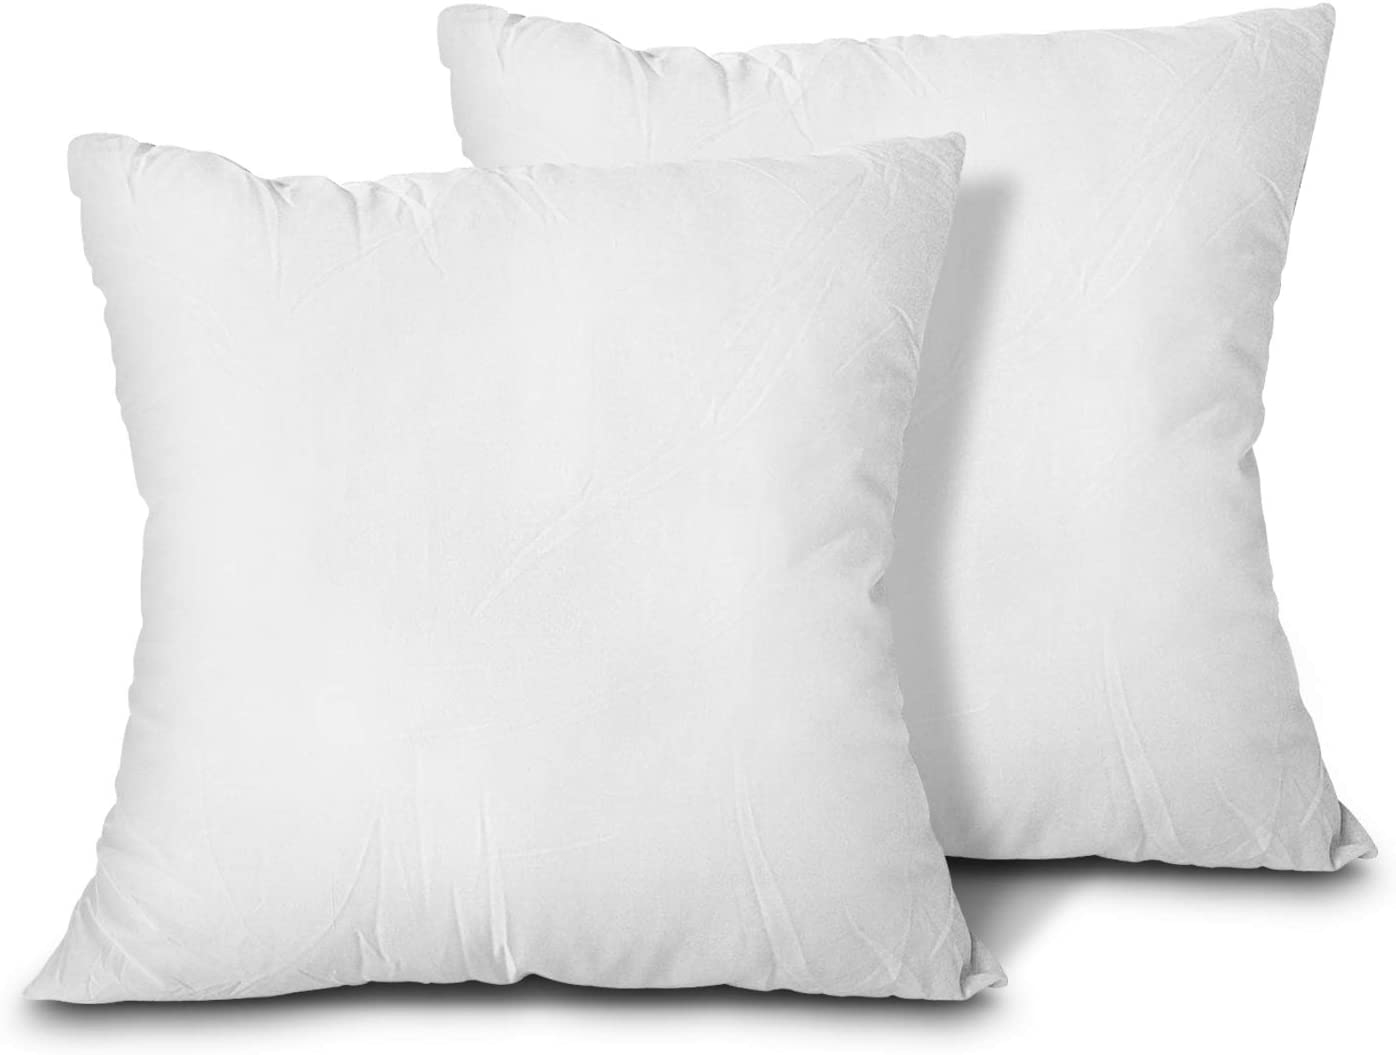 EDOW Microfiber Fill Throw Pillow Inserts, 2-Pack